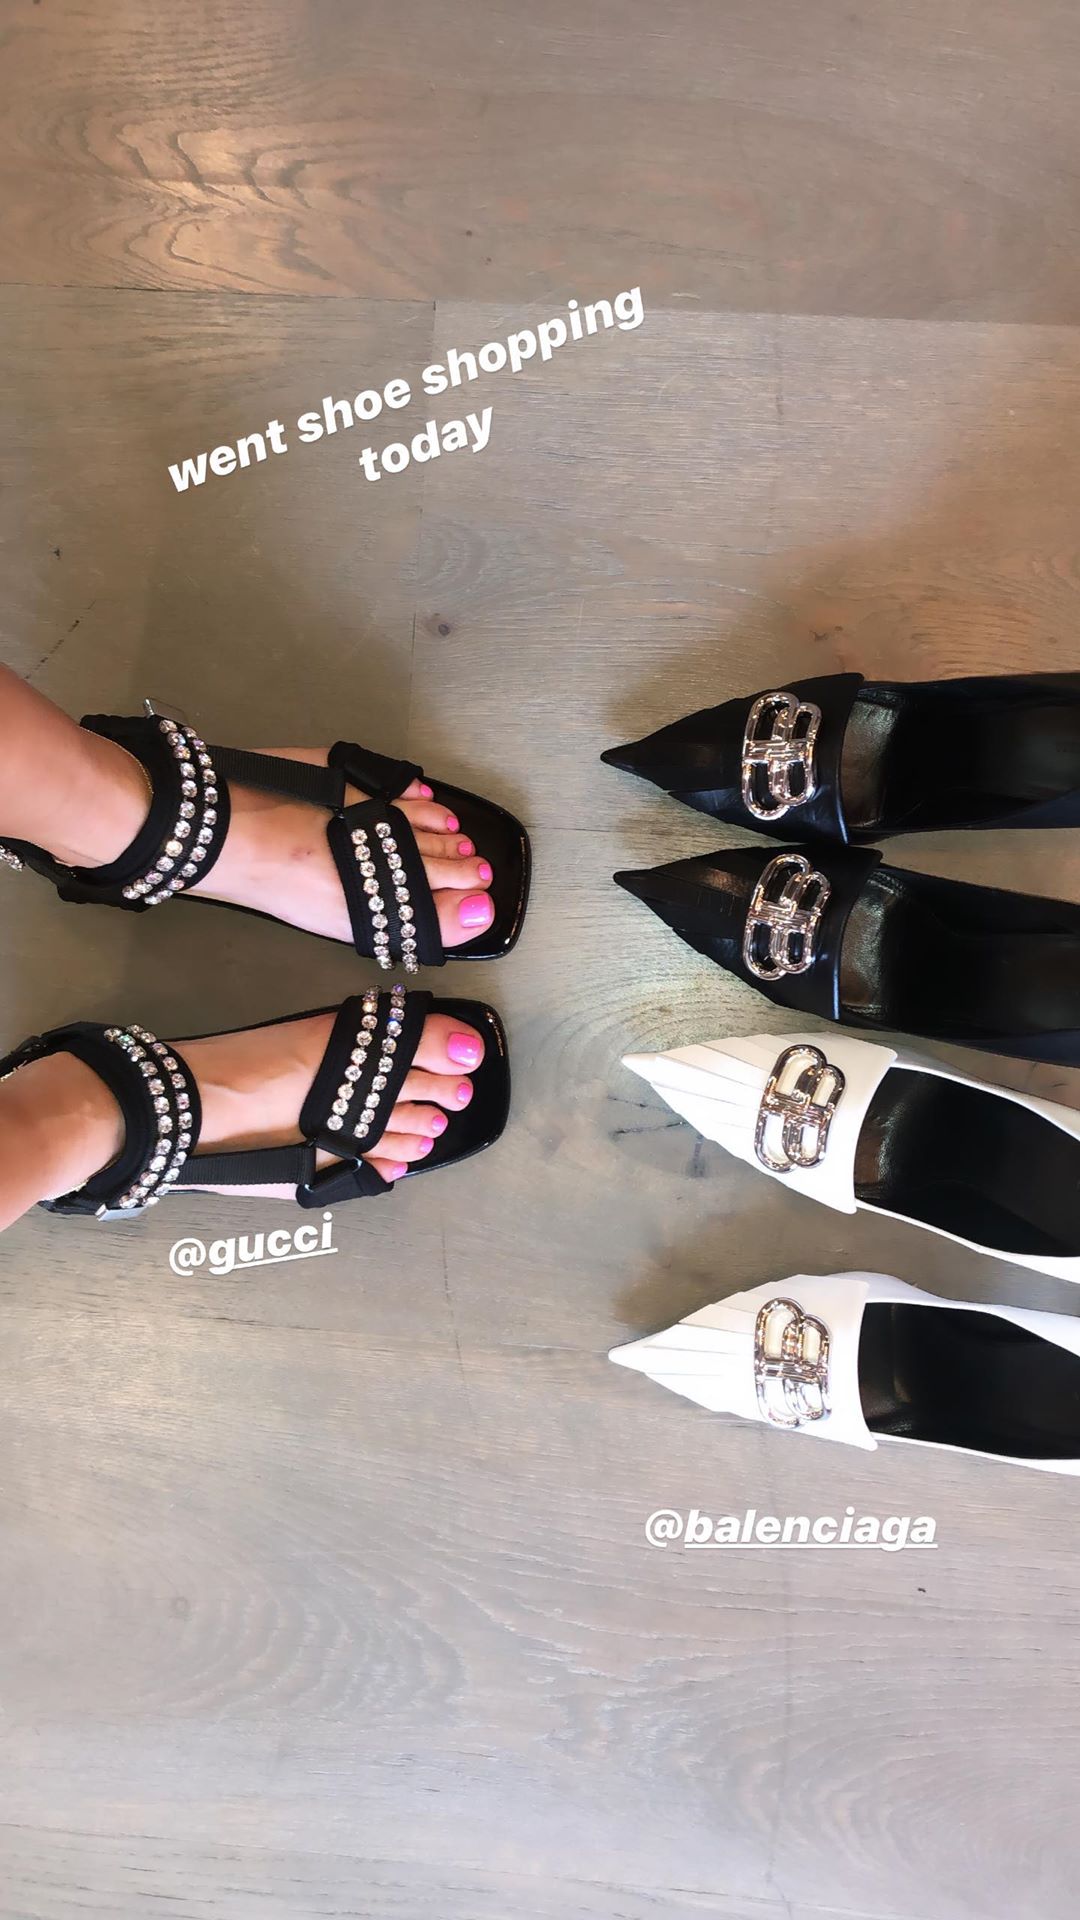 Kylie Jenner shows off portion of impressive shoe collection